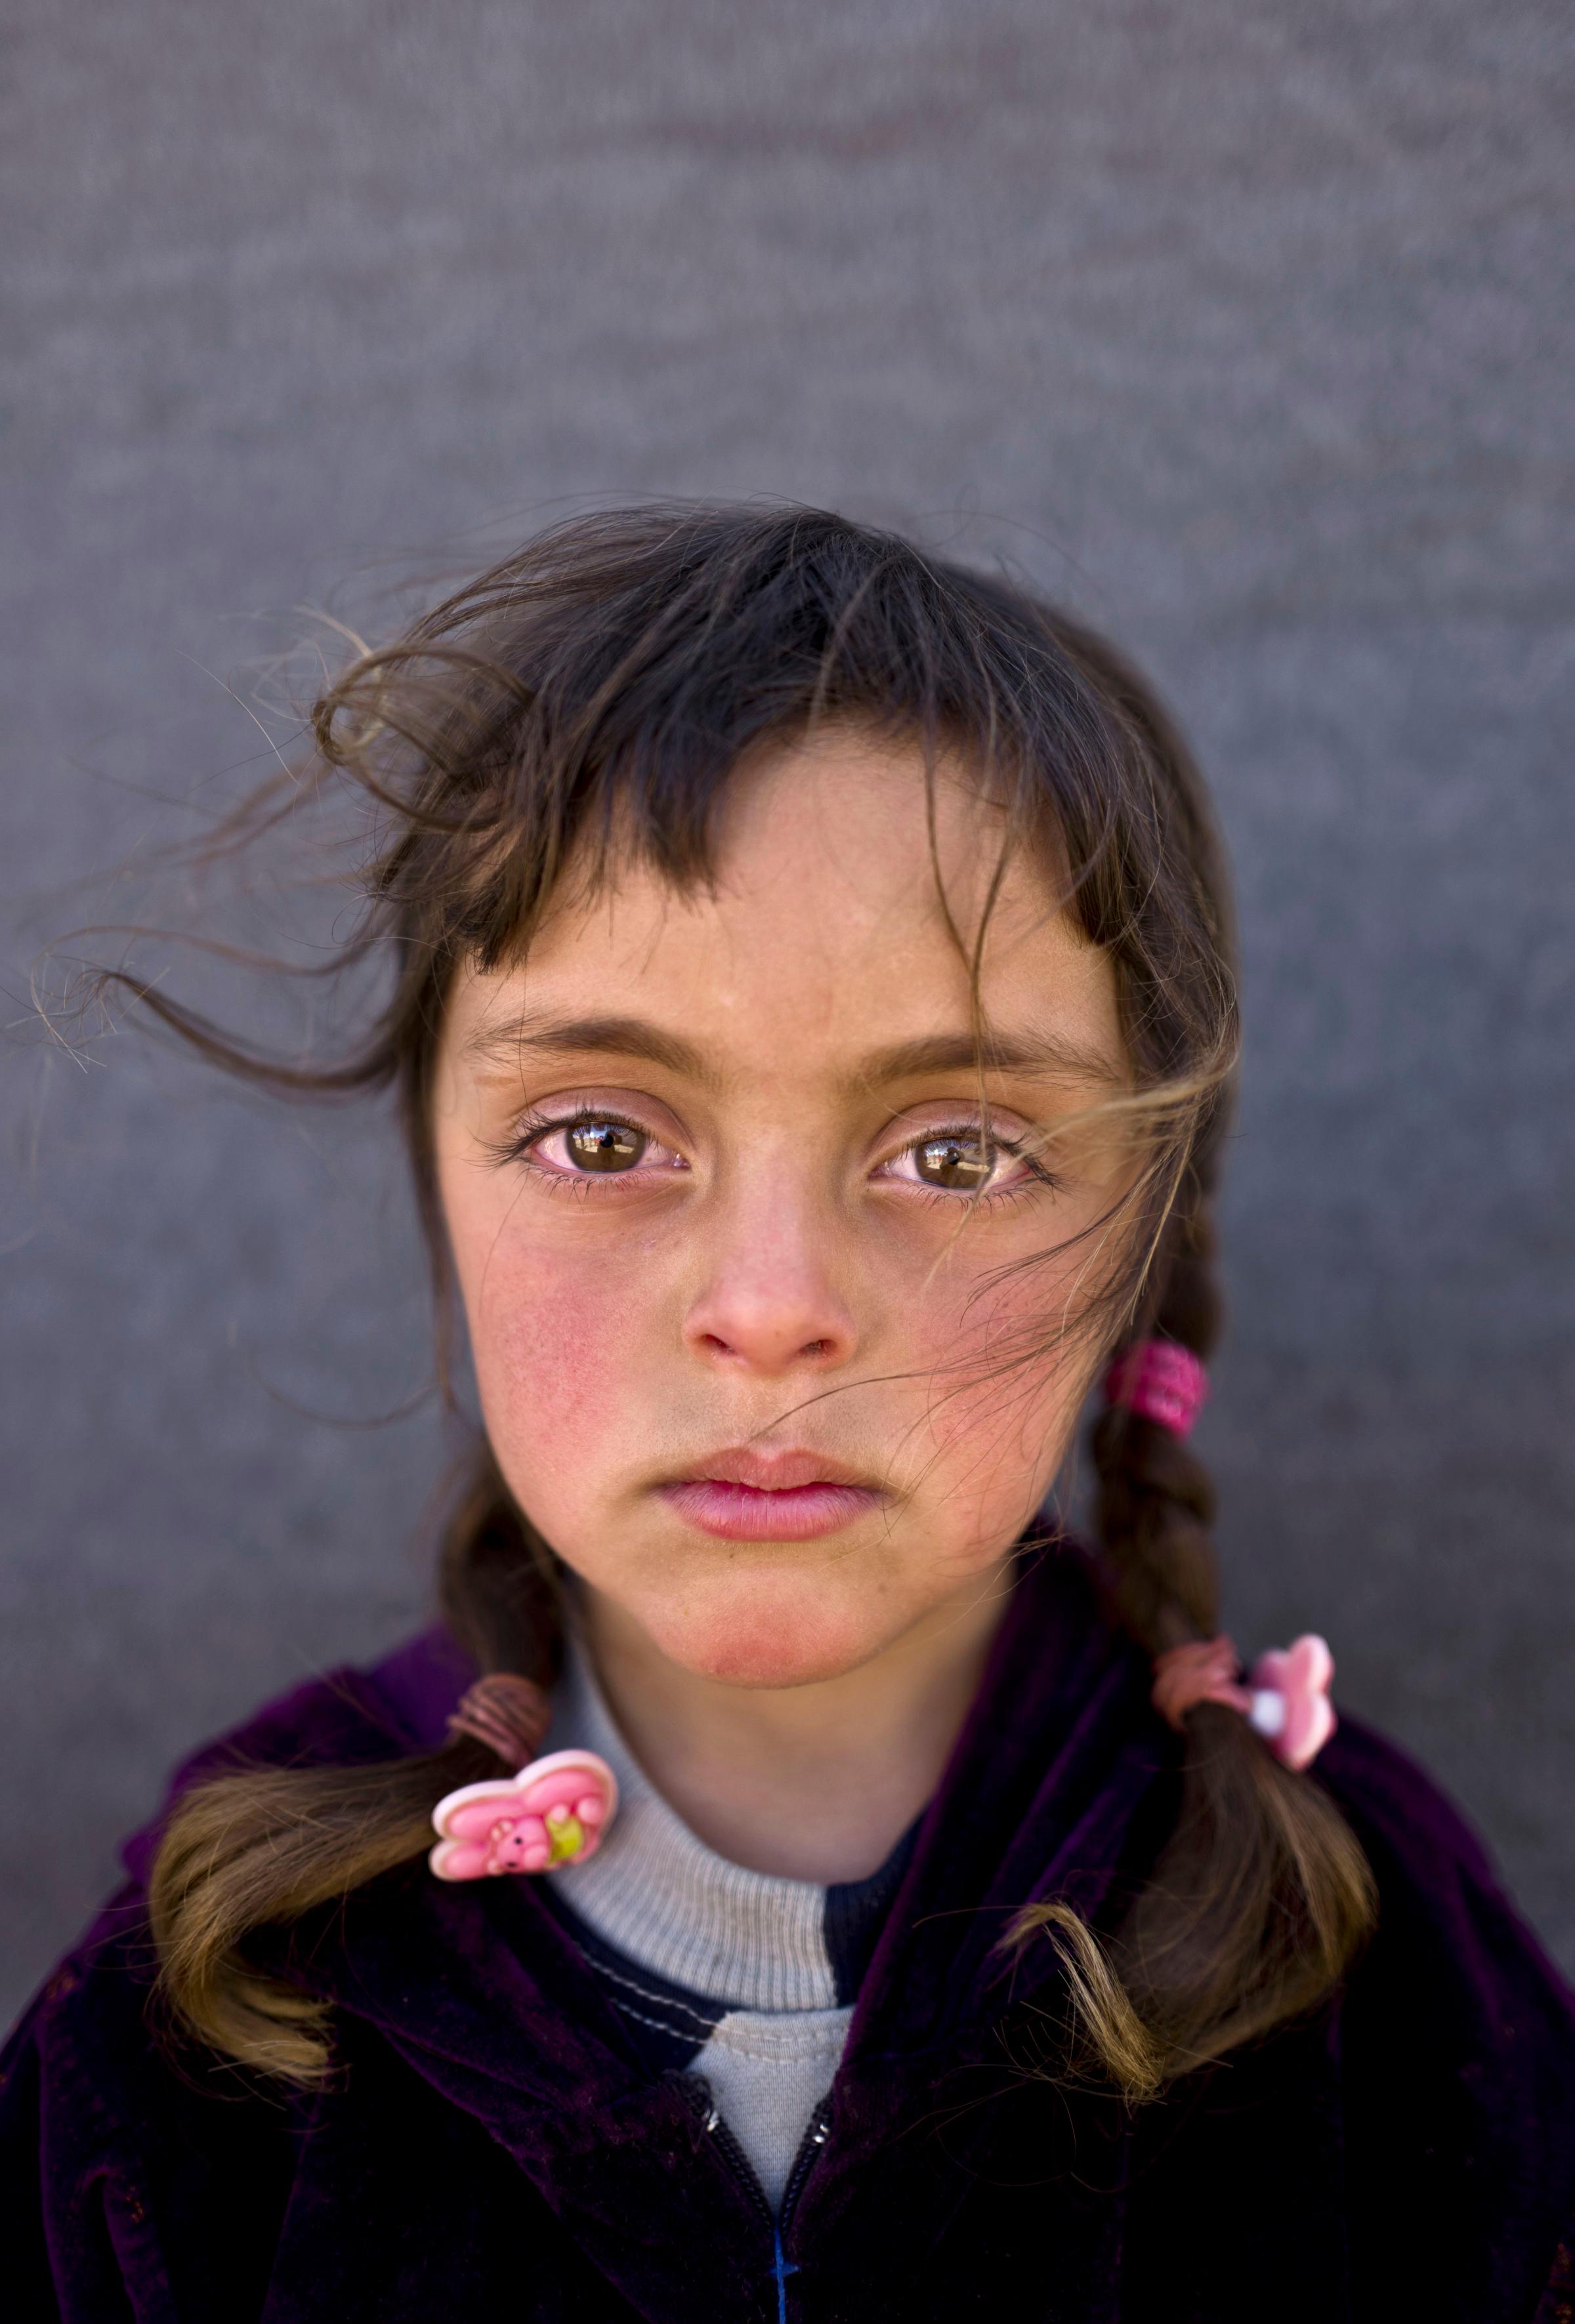 APTOPIX Mideast Jordan Displaced Syrian Children Photo Essay